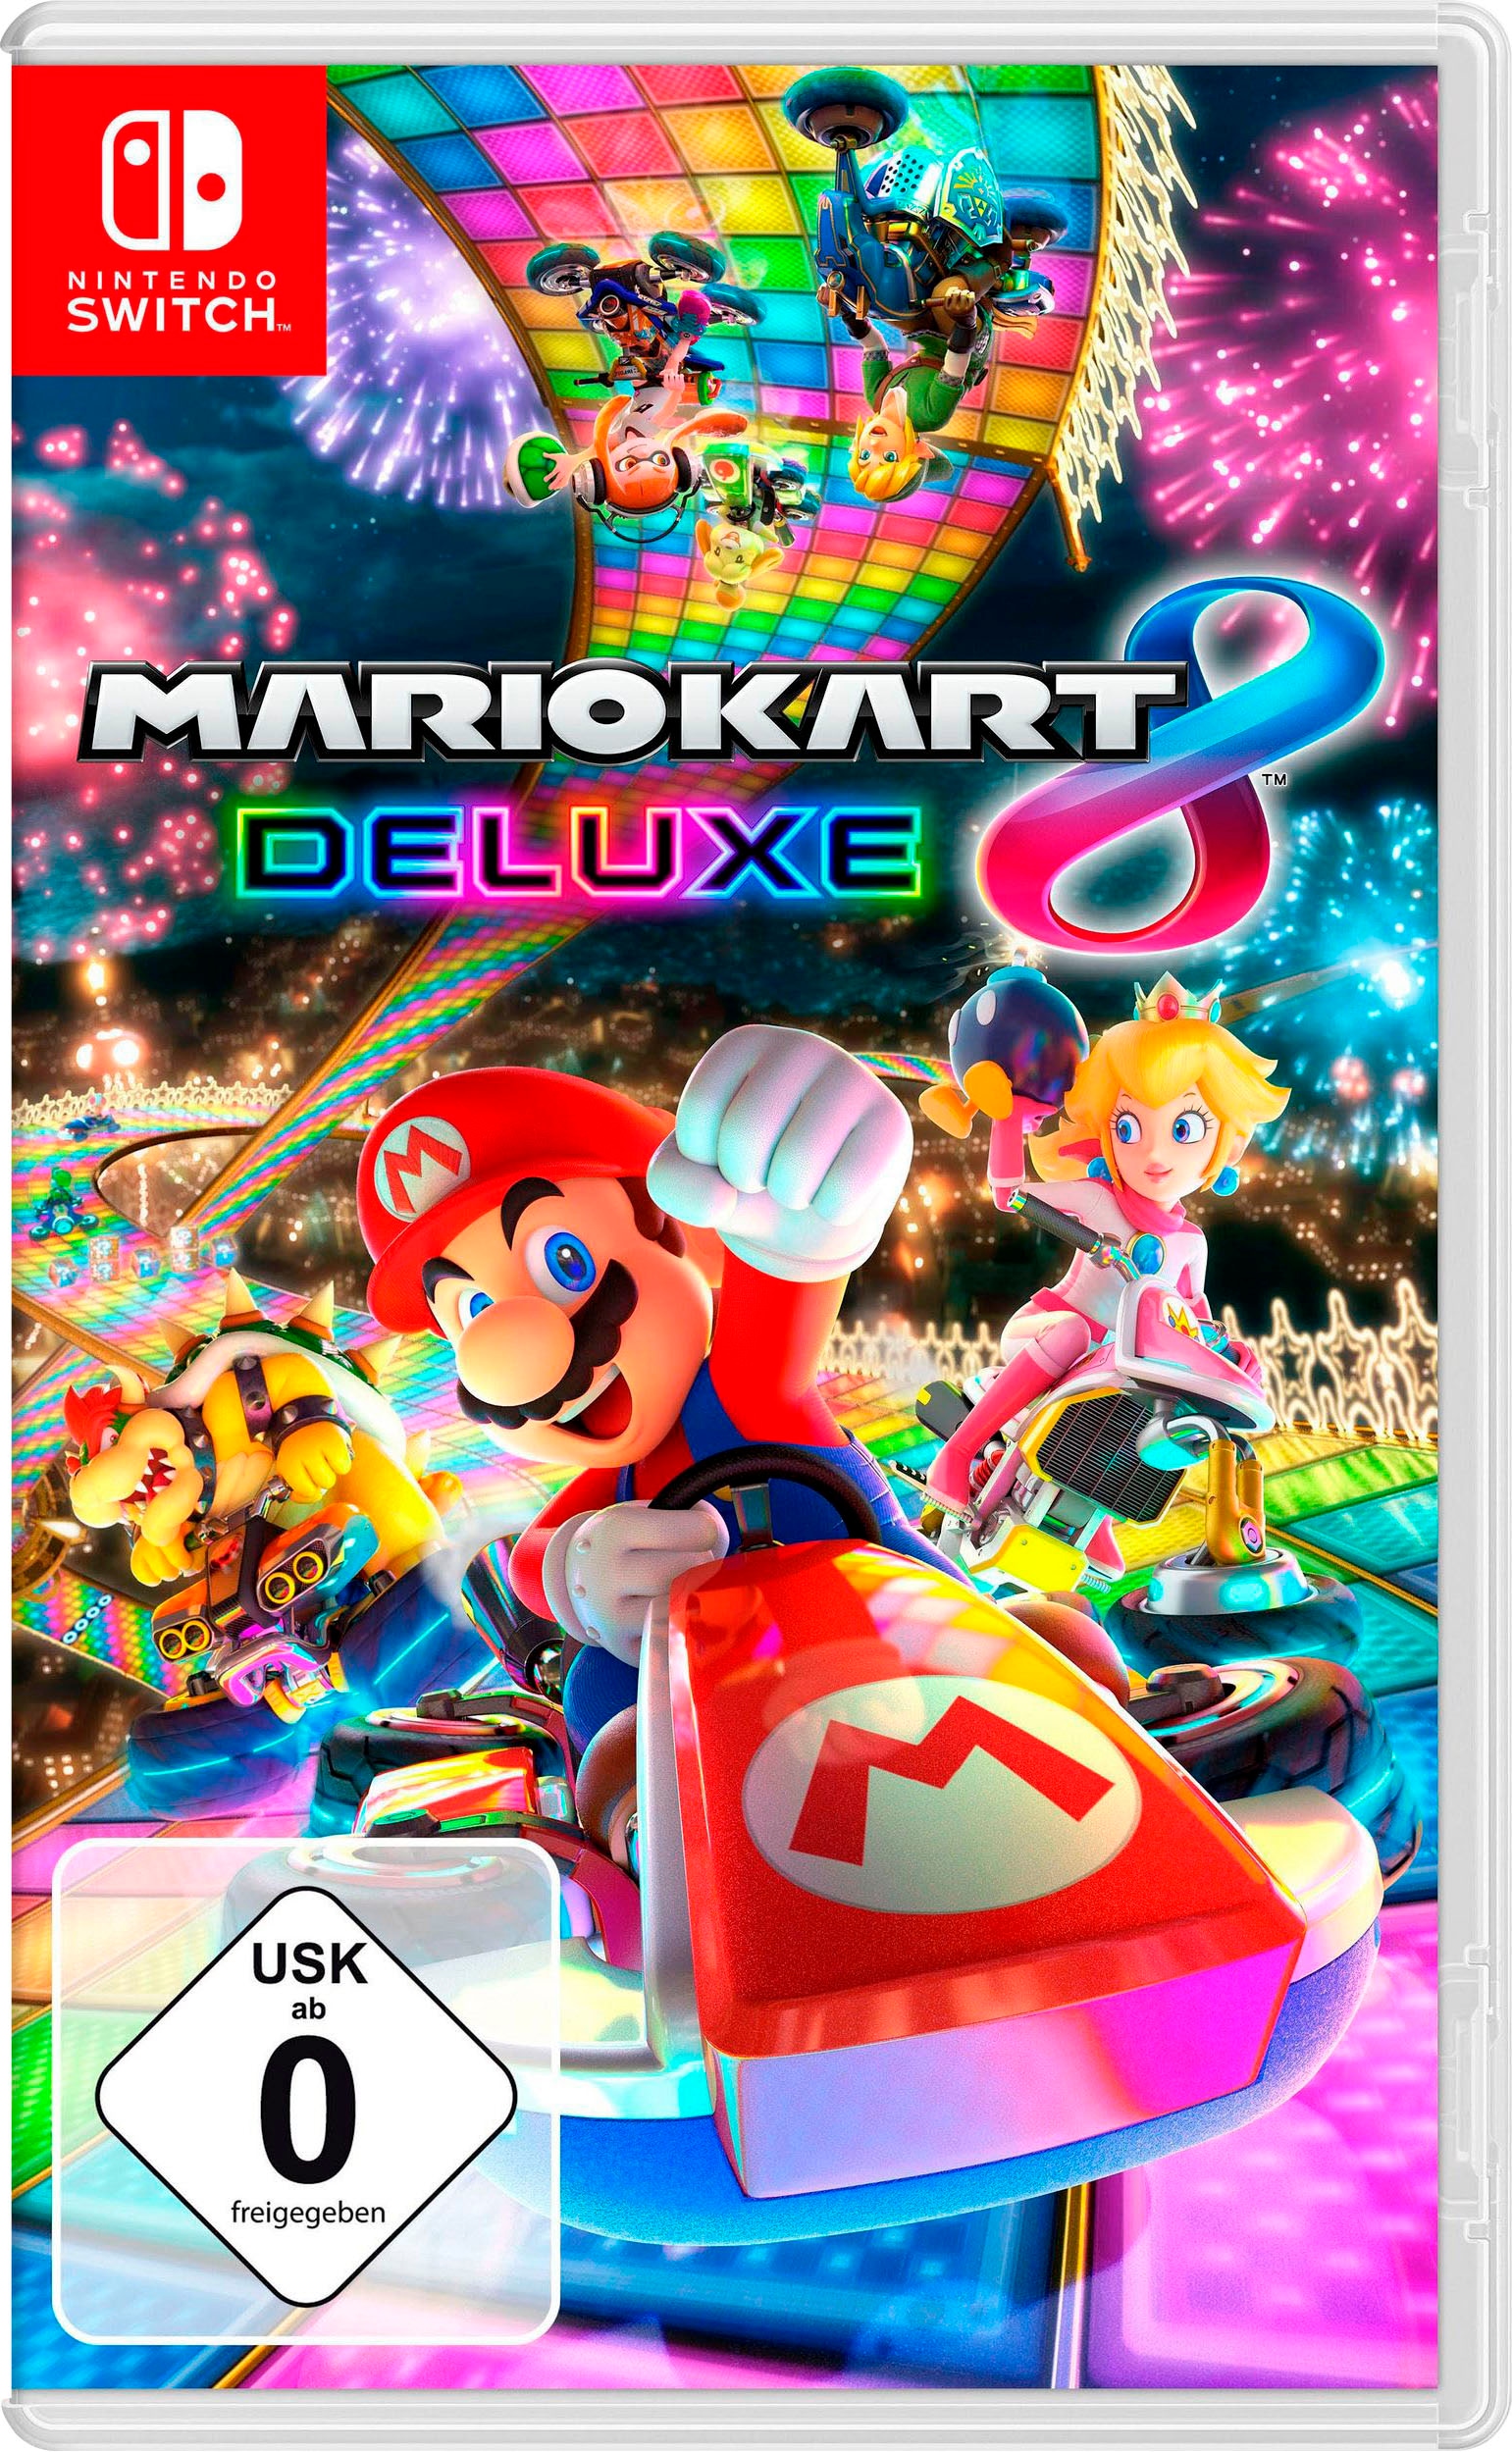 Nintendo Switch Spielesoftware »Mario Kart 8 Deluxe«, Nintendo Switch, inkl. Booster-Streckenpass